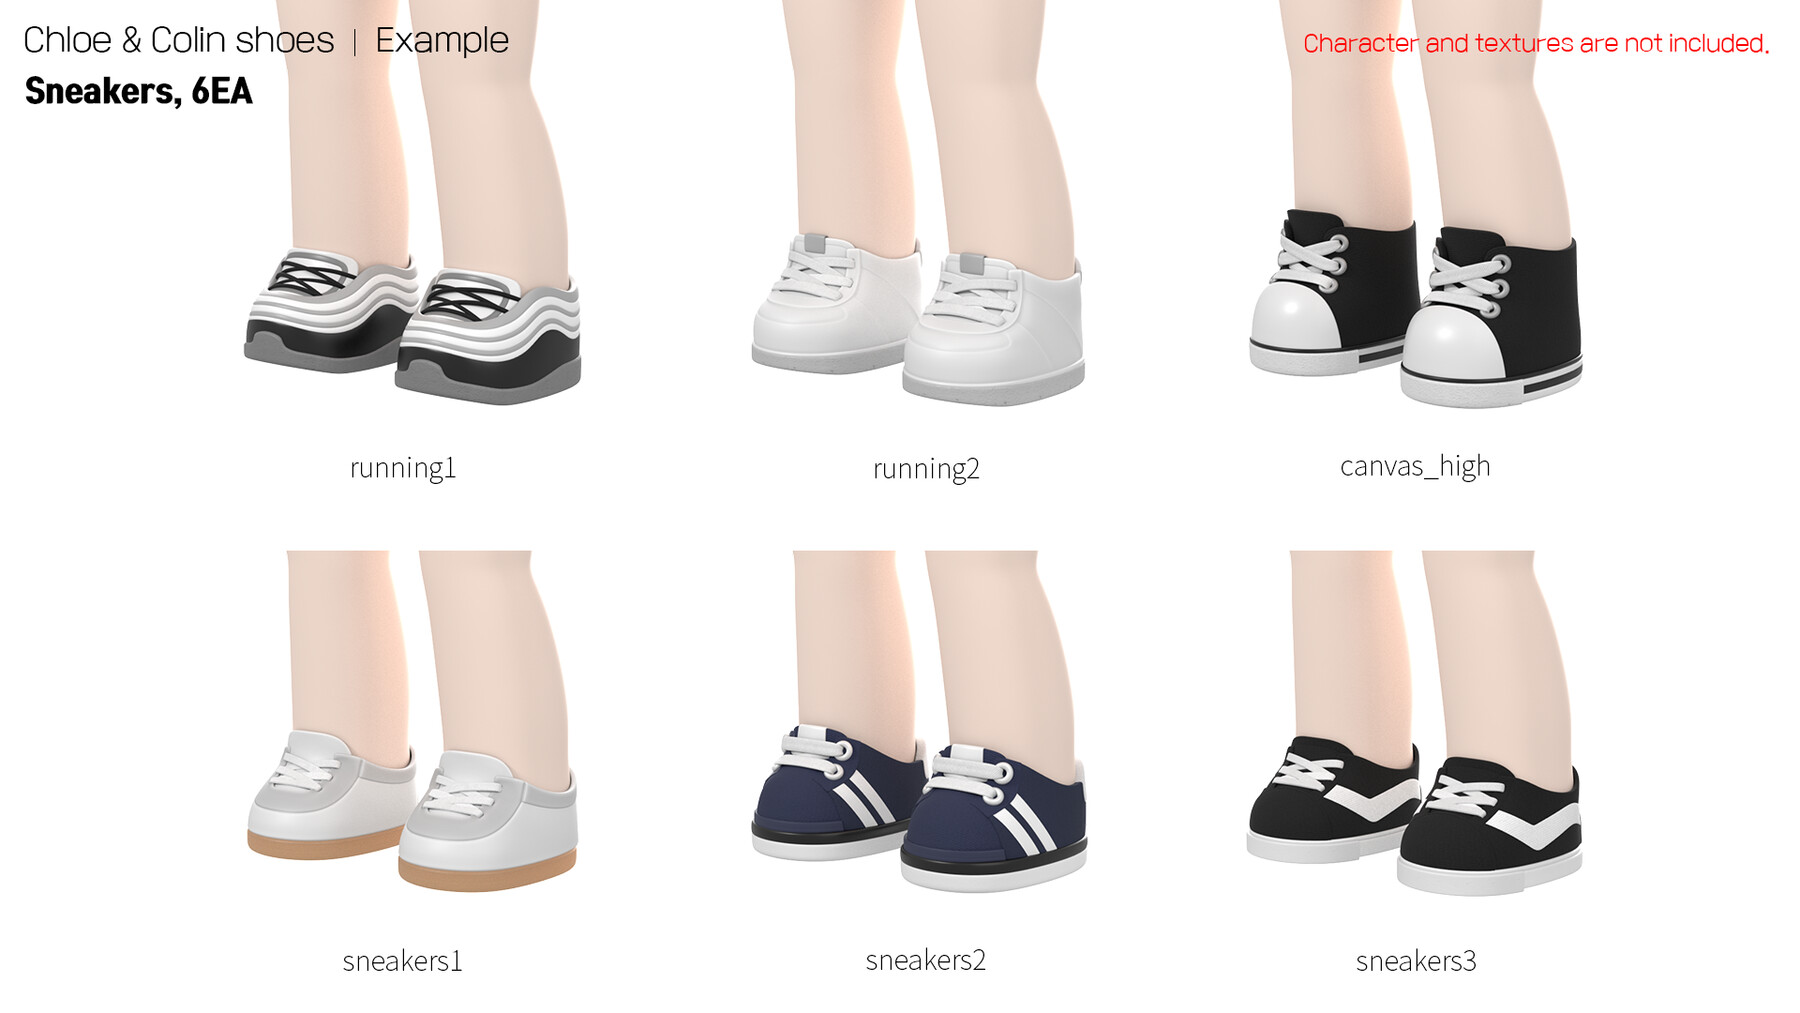 ArtStation - Chloe&Colin shoes | Resources